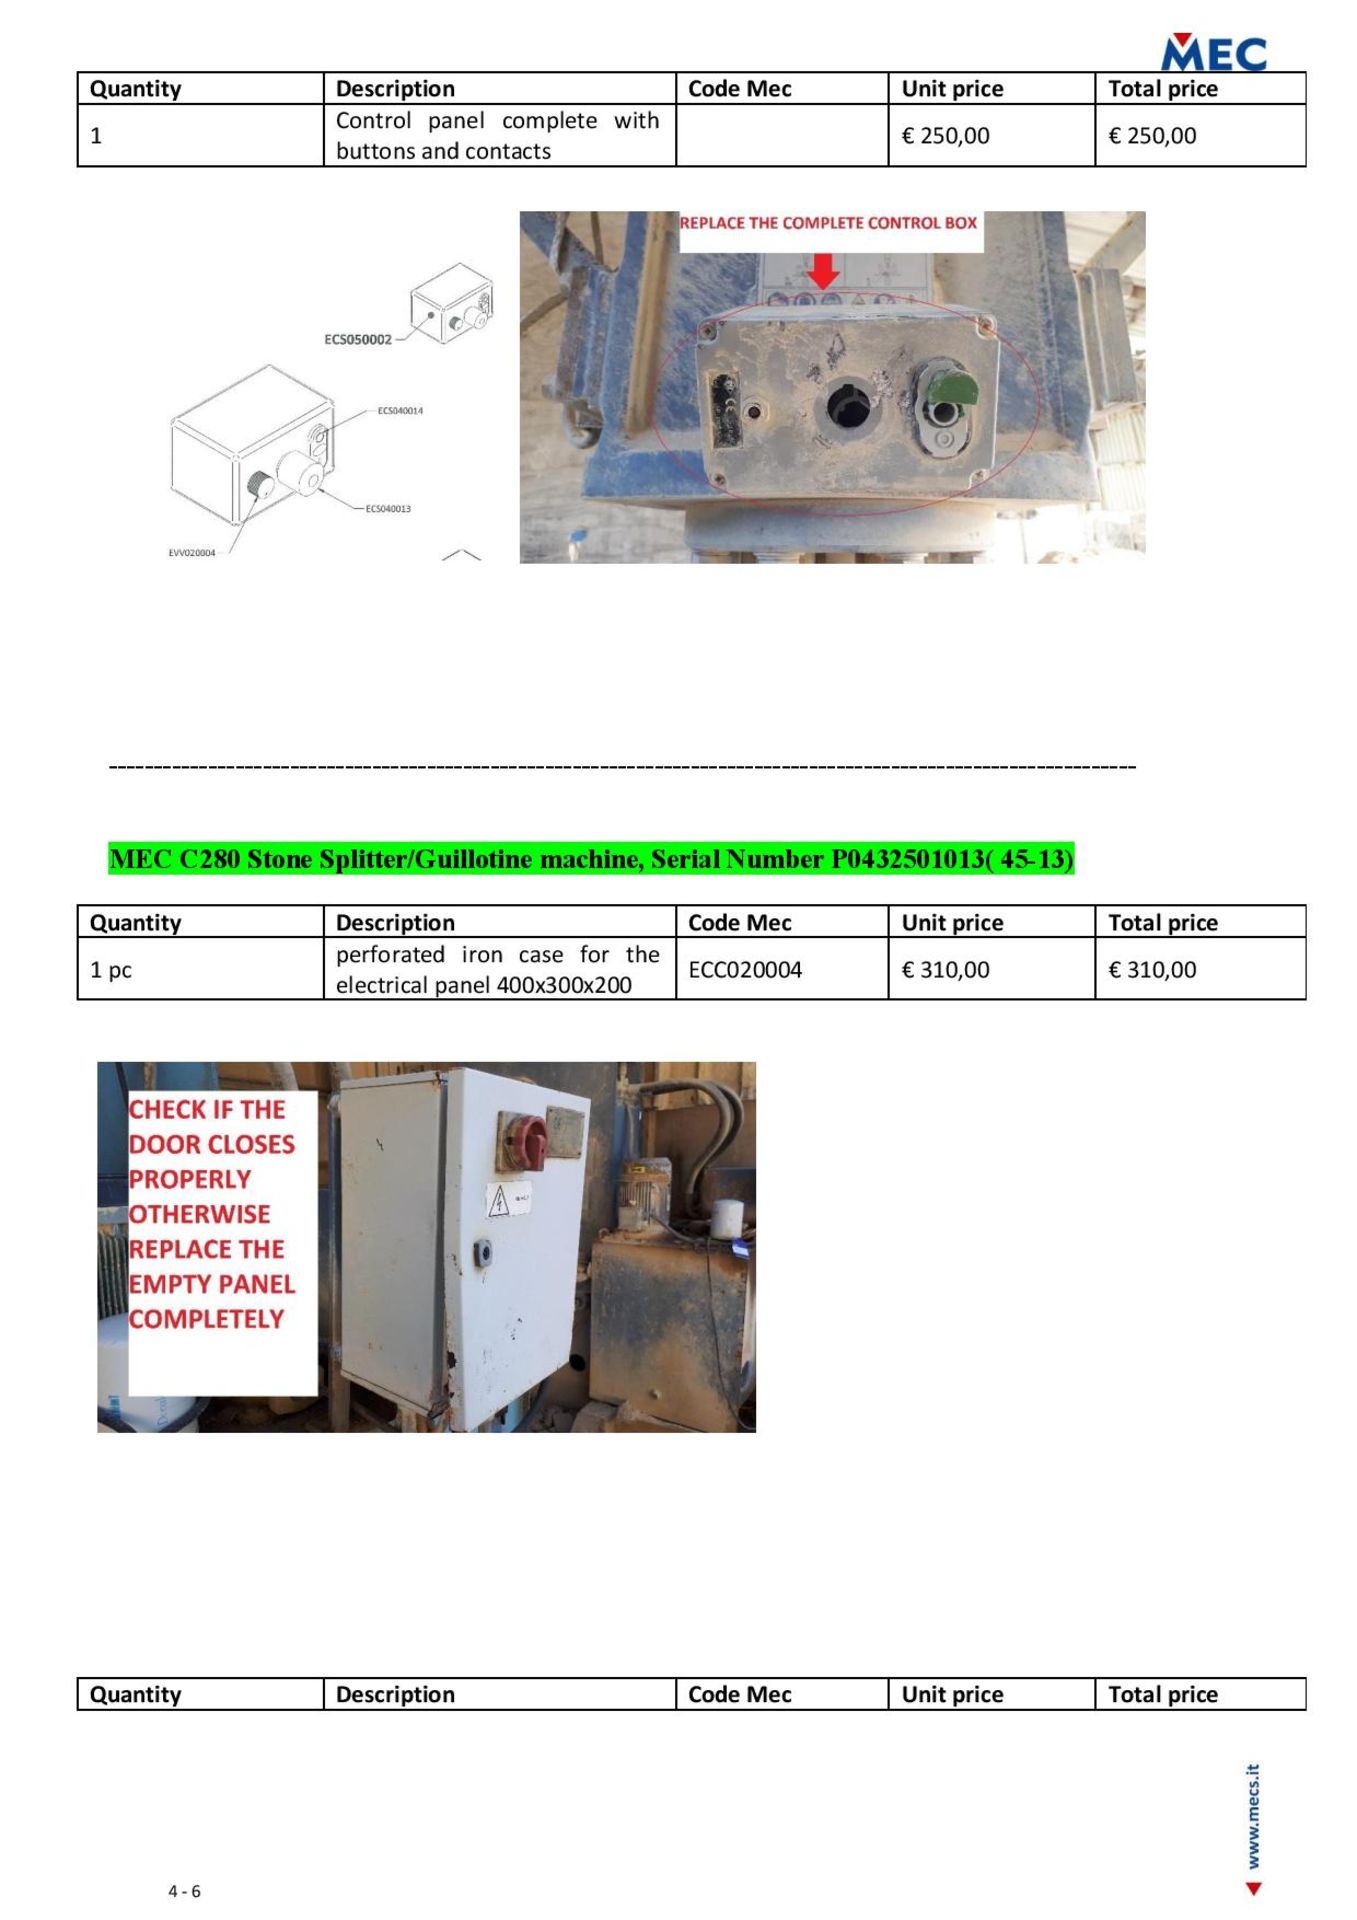 MEC C320 Stone Splitter/Guillotine machine, Serial Number P0932600712 (2012). Damaged operator - Image 18 of 20